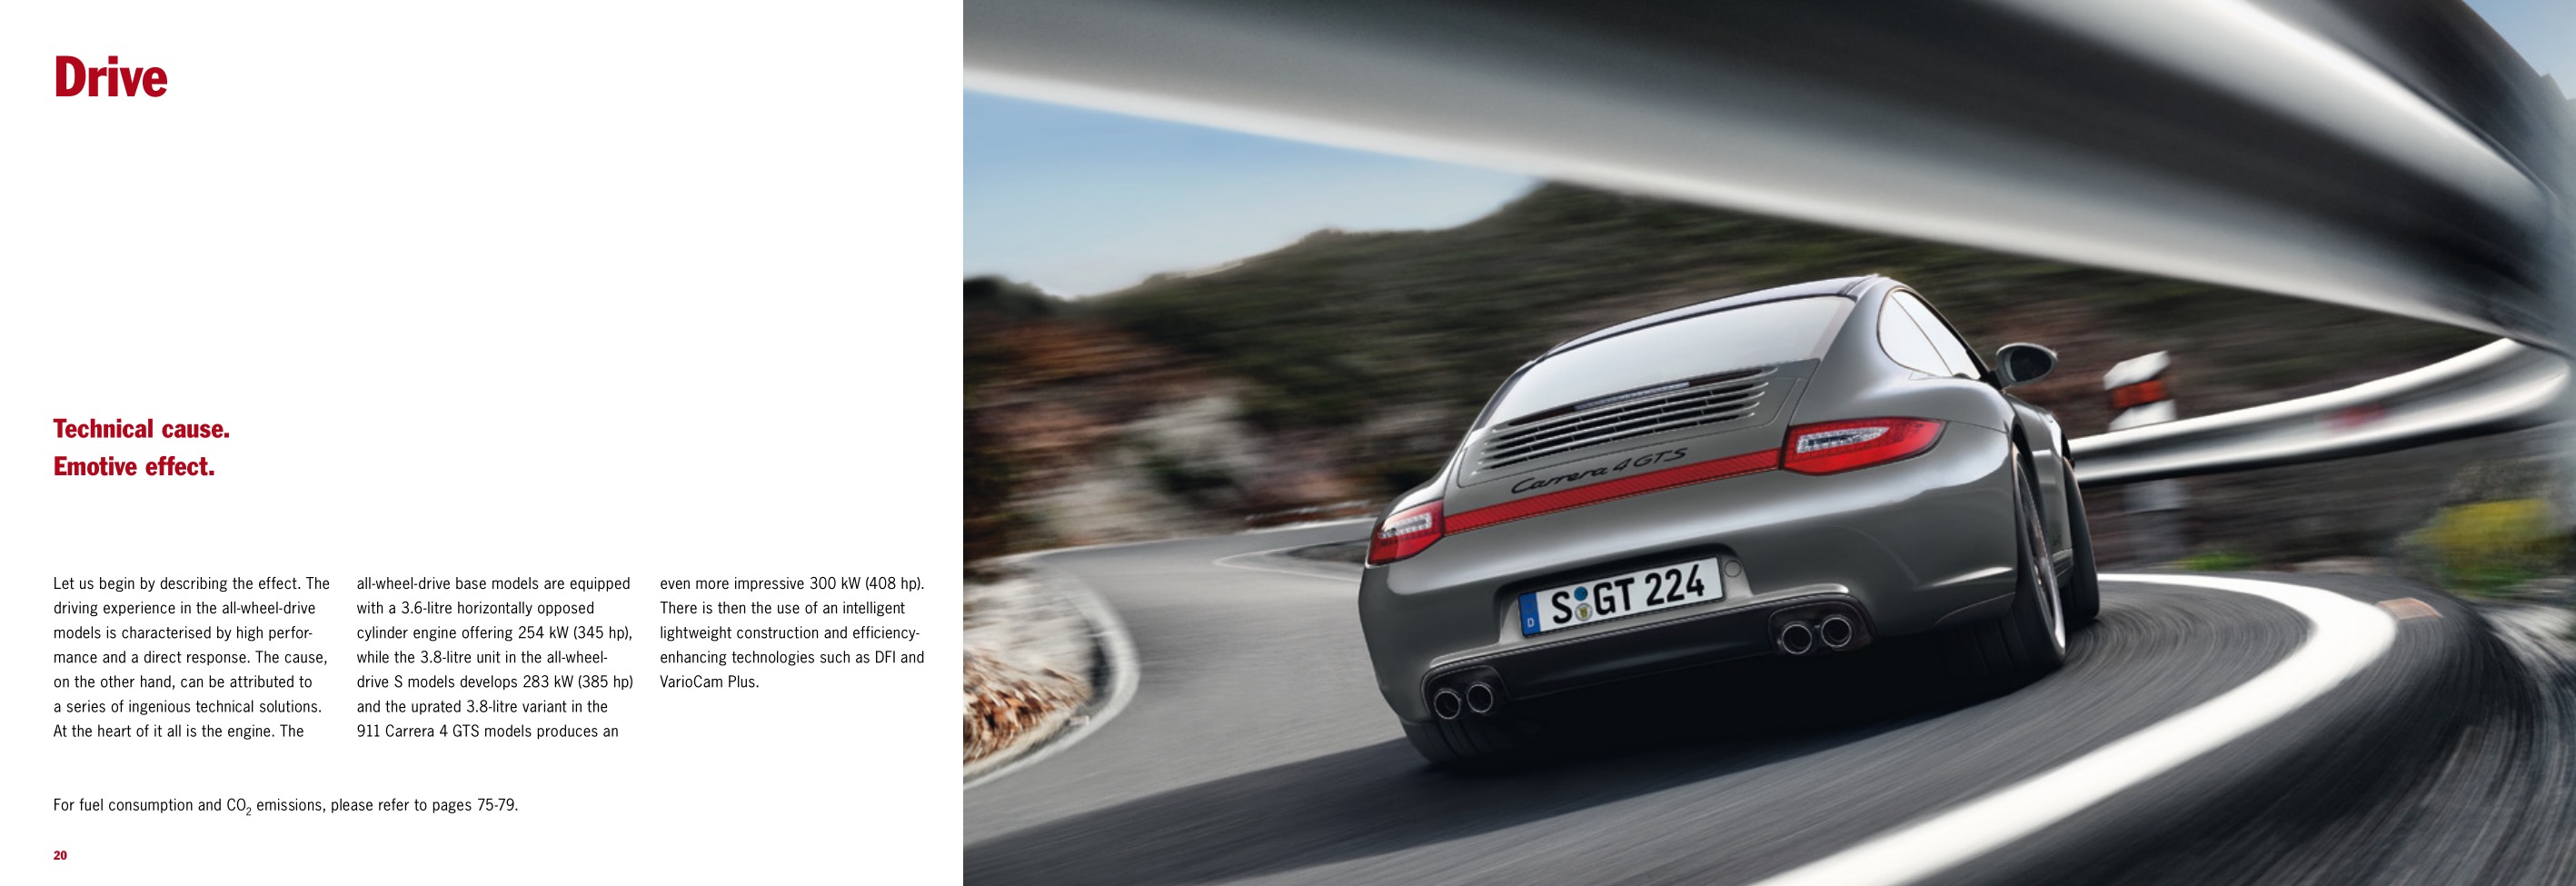 2012 Porsche 911 997 Brochure Page 4